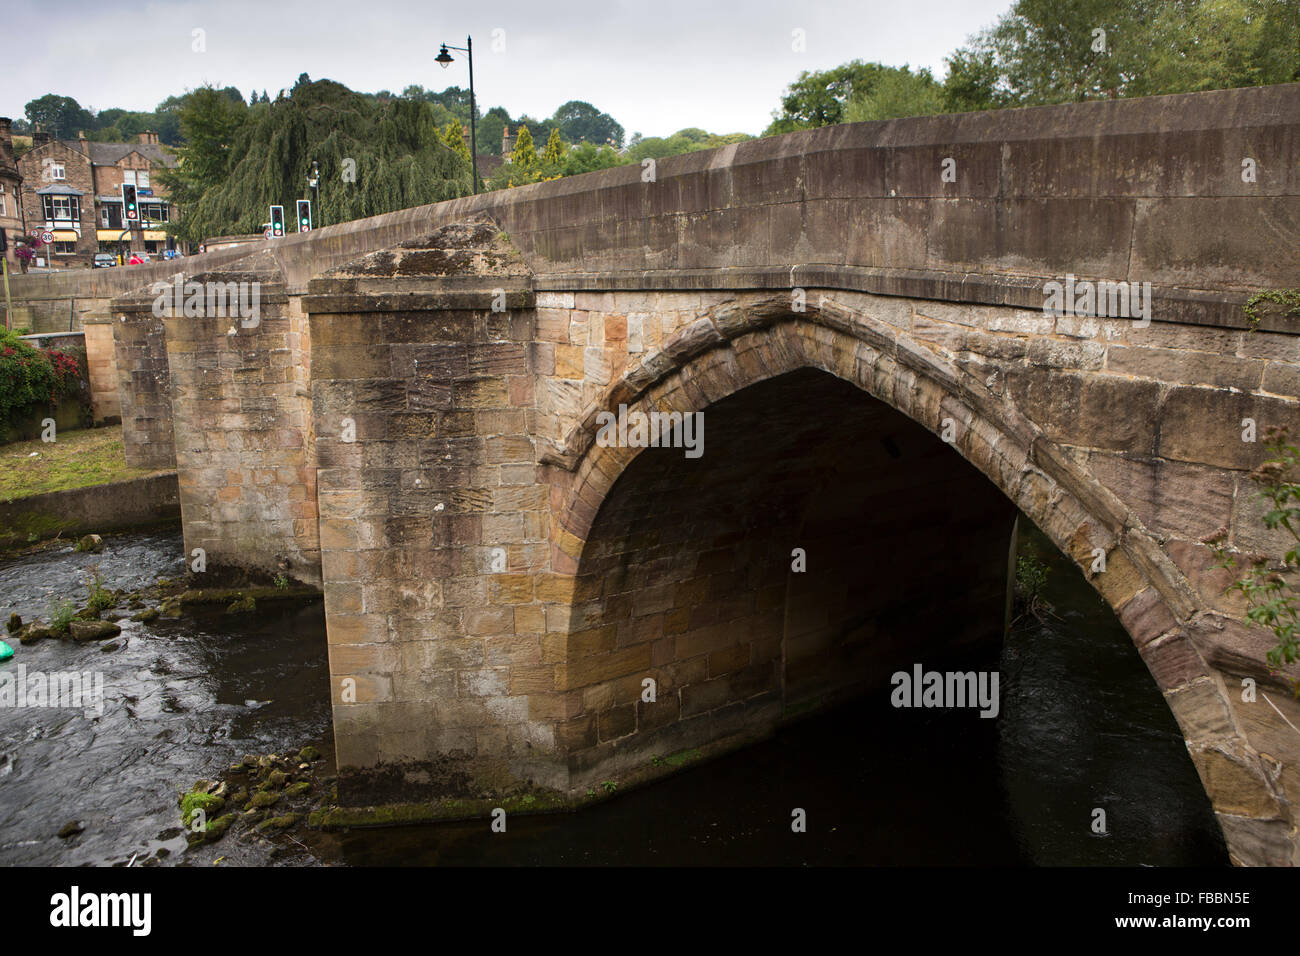 UK, England, Derbyshire, Matlock, old stone bridge over River Derwent Stock Photo